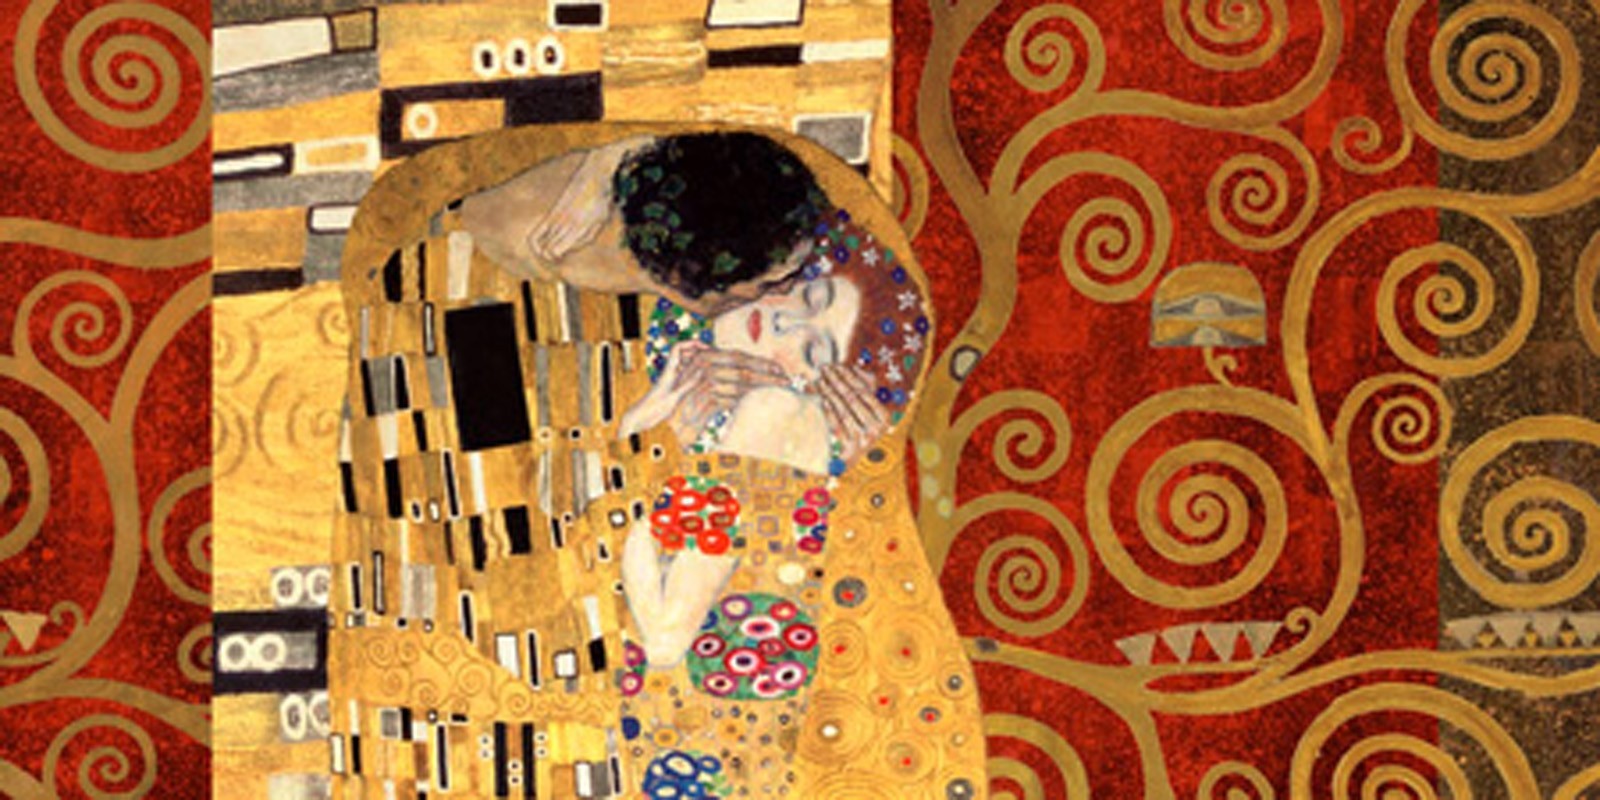 Gustav Klimt - Klimt Patterns - The Kiss (Gold)